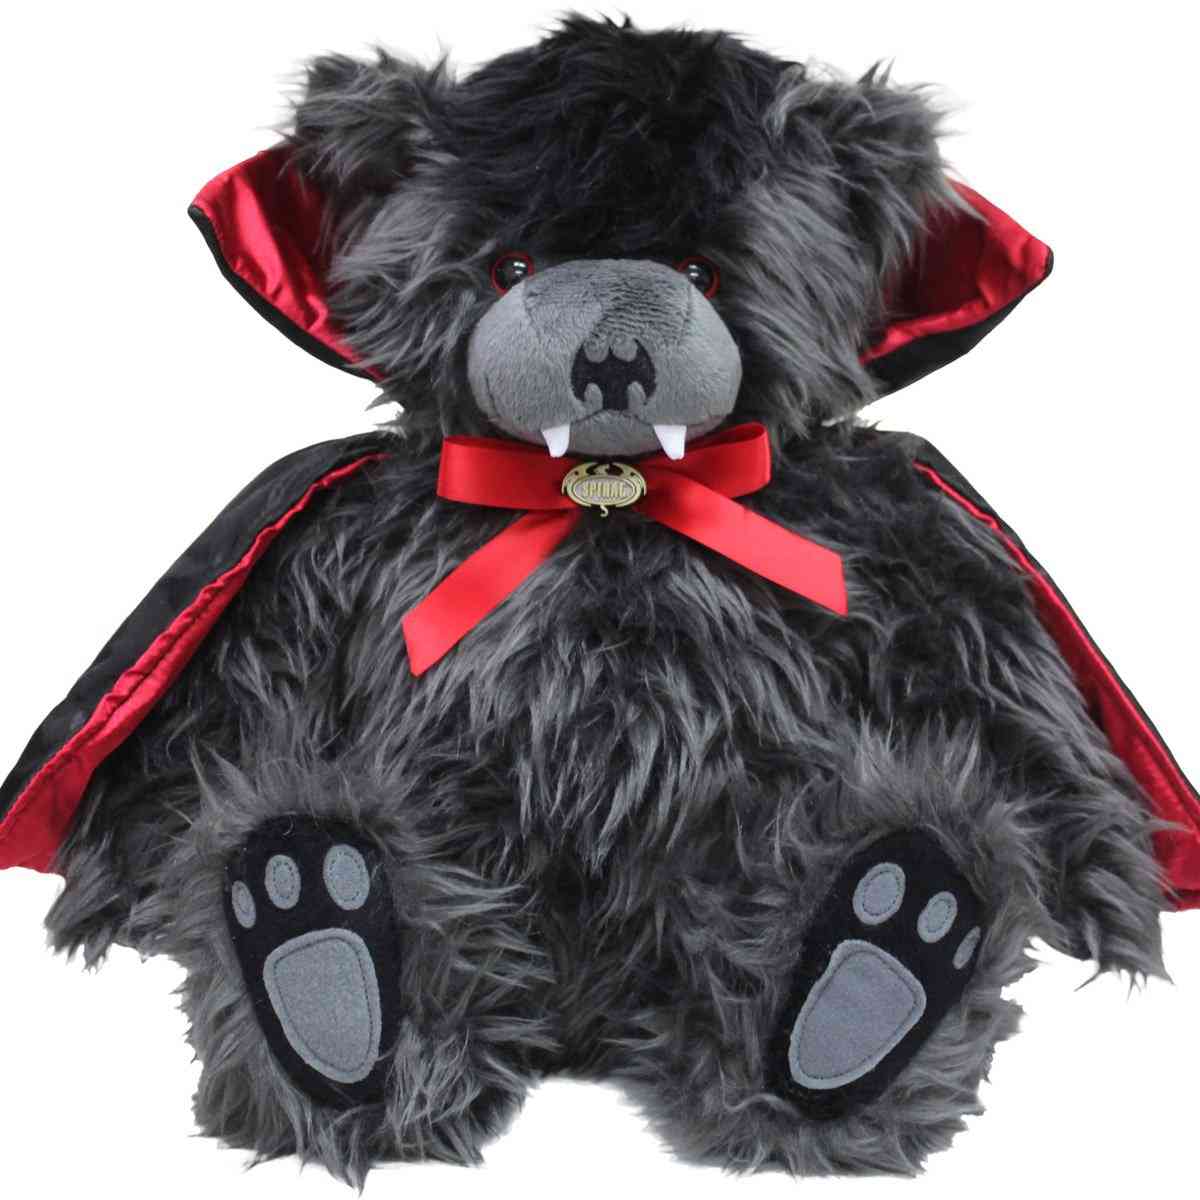 Ted The Impaler - Teddy Bear Soft Plush Toy